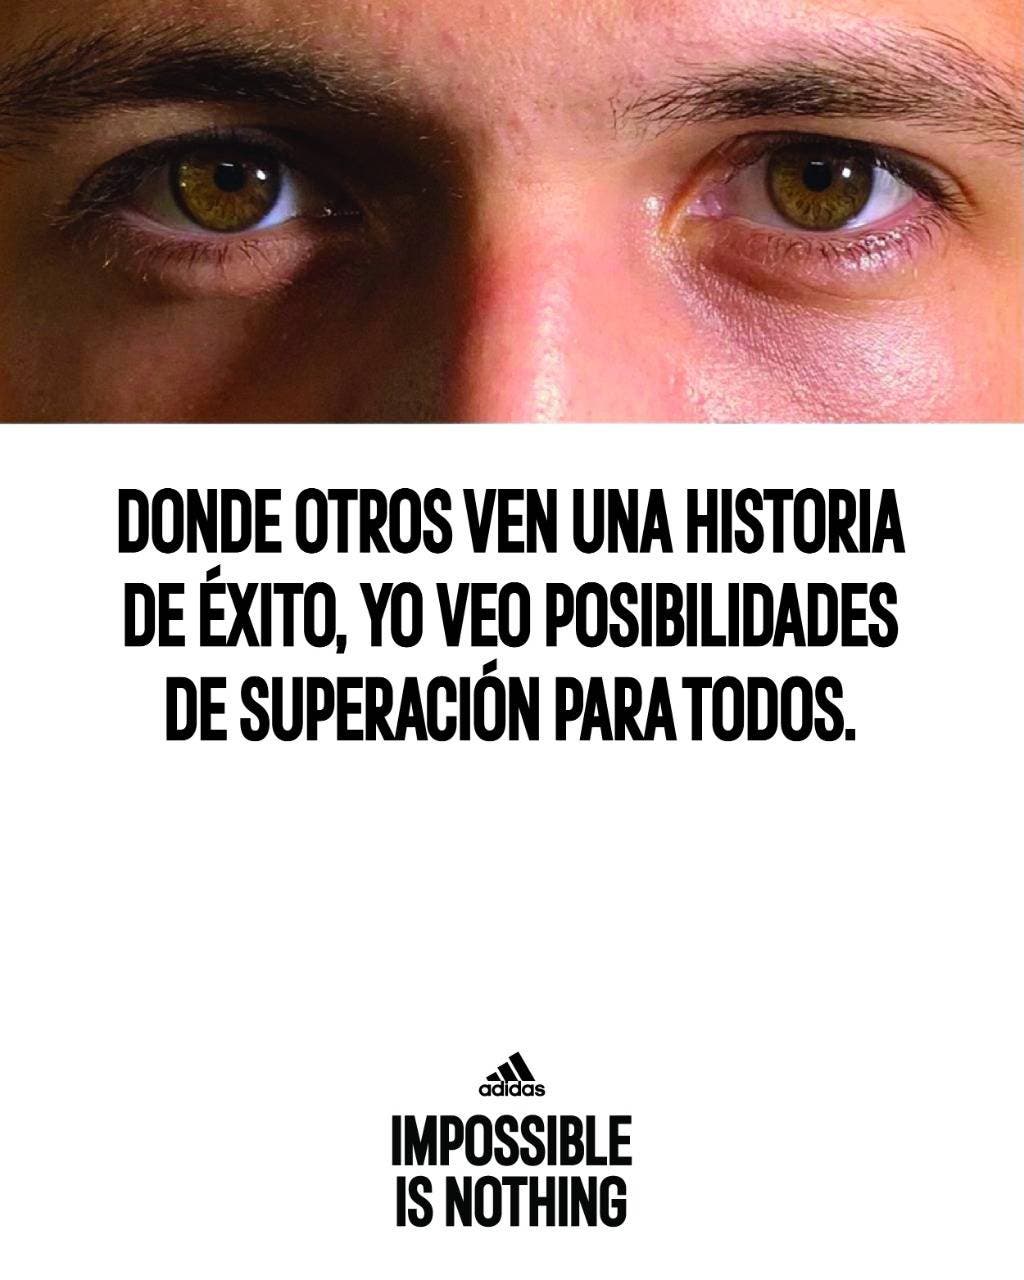 Adidas se une a Leo Messi para presentar su campaña global “Impossible is Nothing”